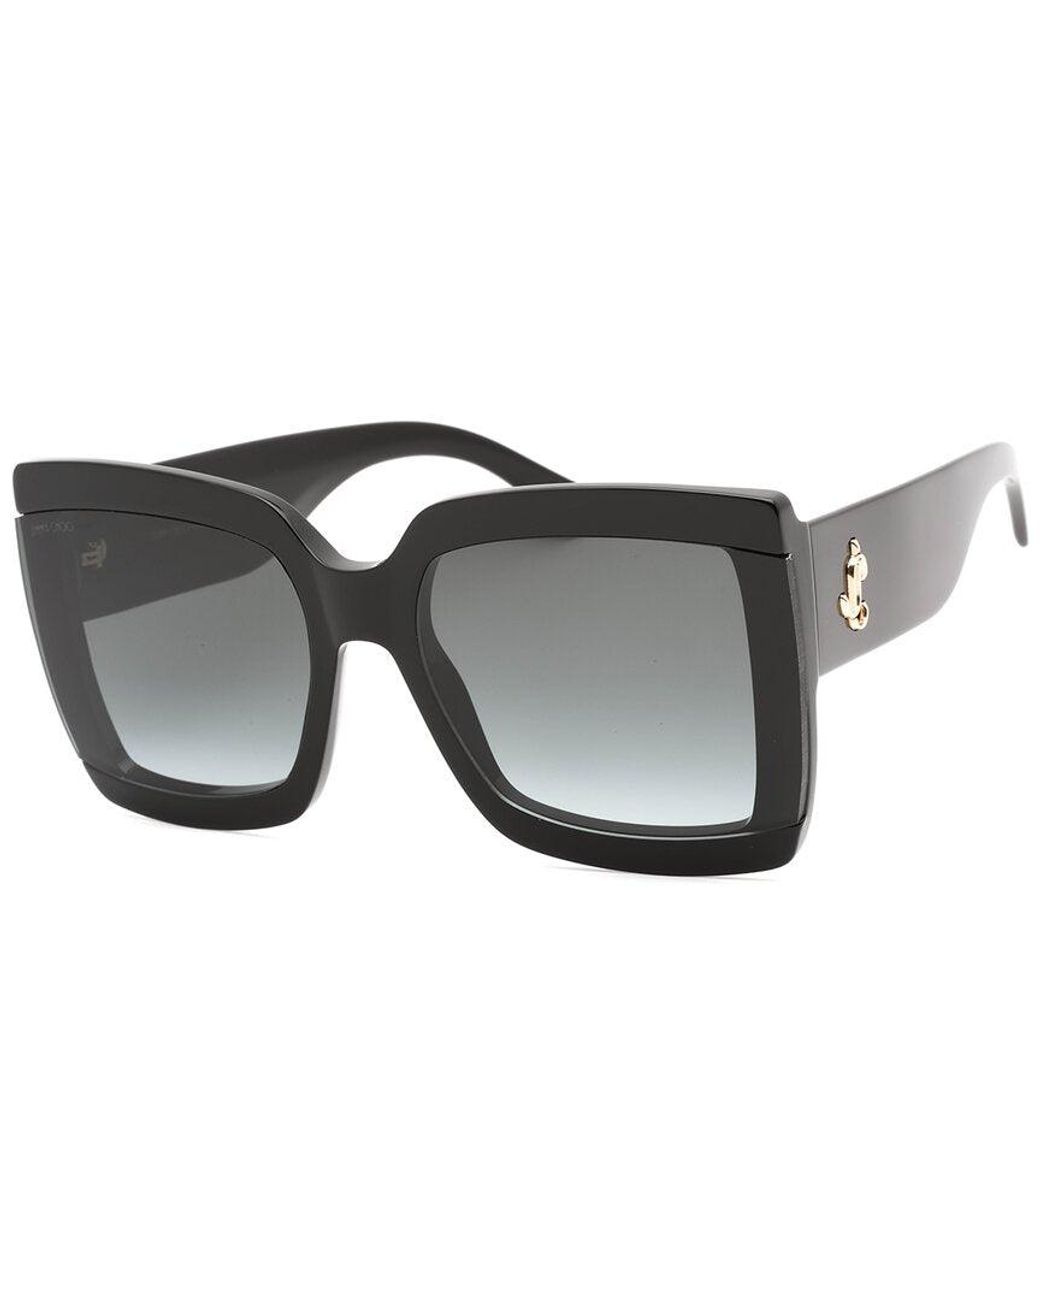 Jimmy Choo Renee/s 61mm Sunglasses in Black